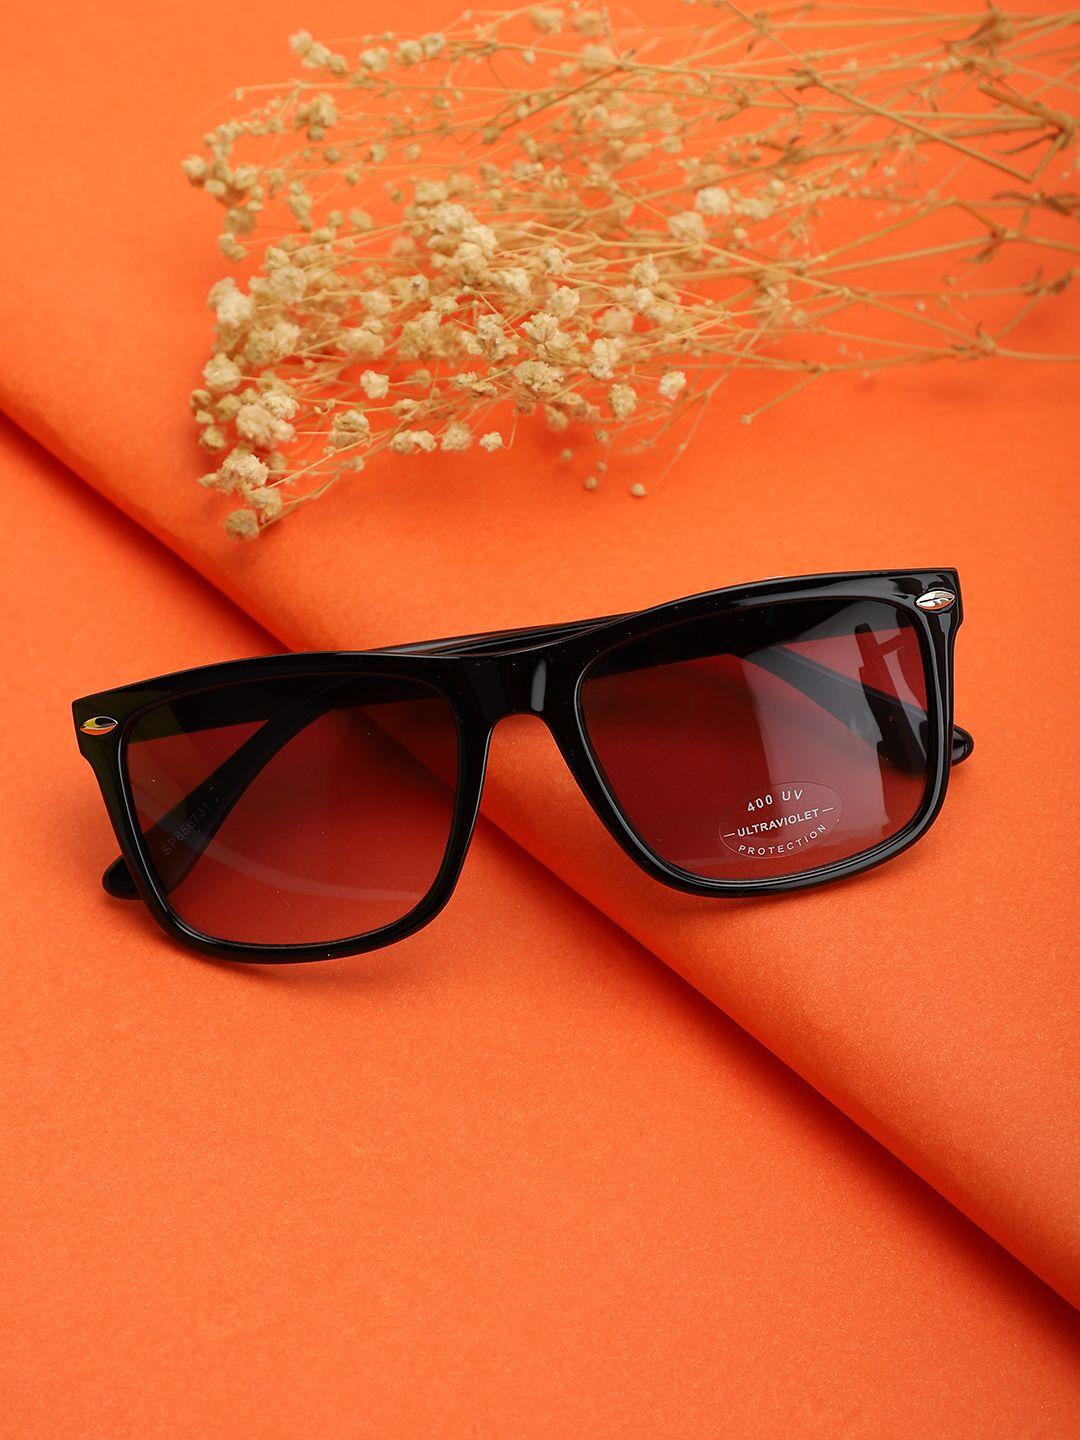 carlton-london-men-grey-lens-&-black-wayfarer-sunglasses-with-uv-protected-lens-clsm001